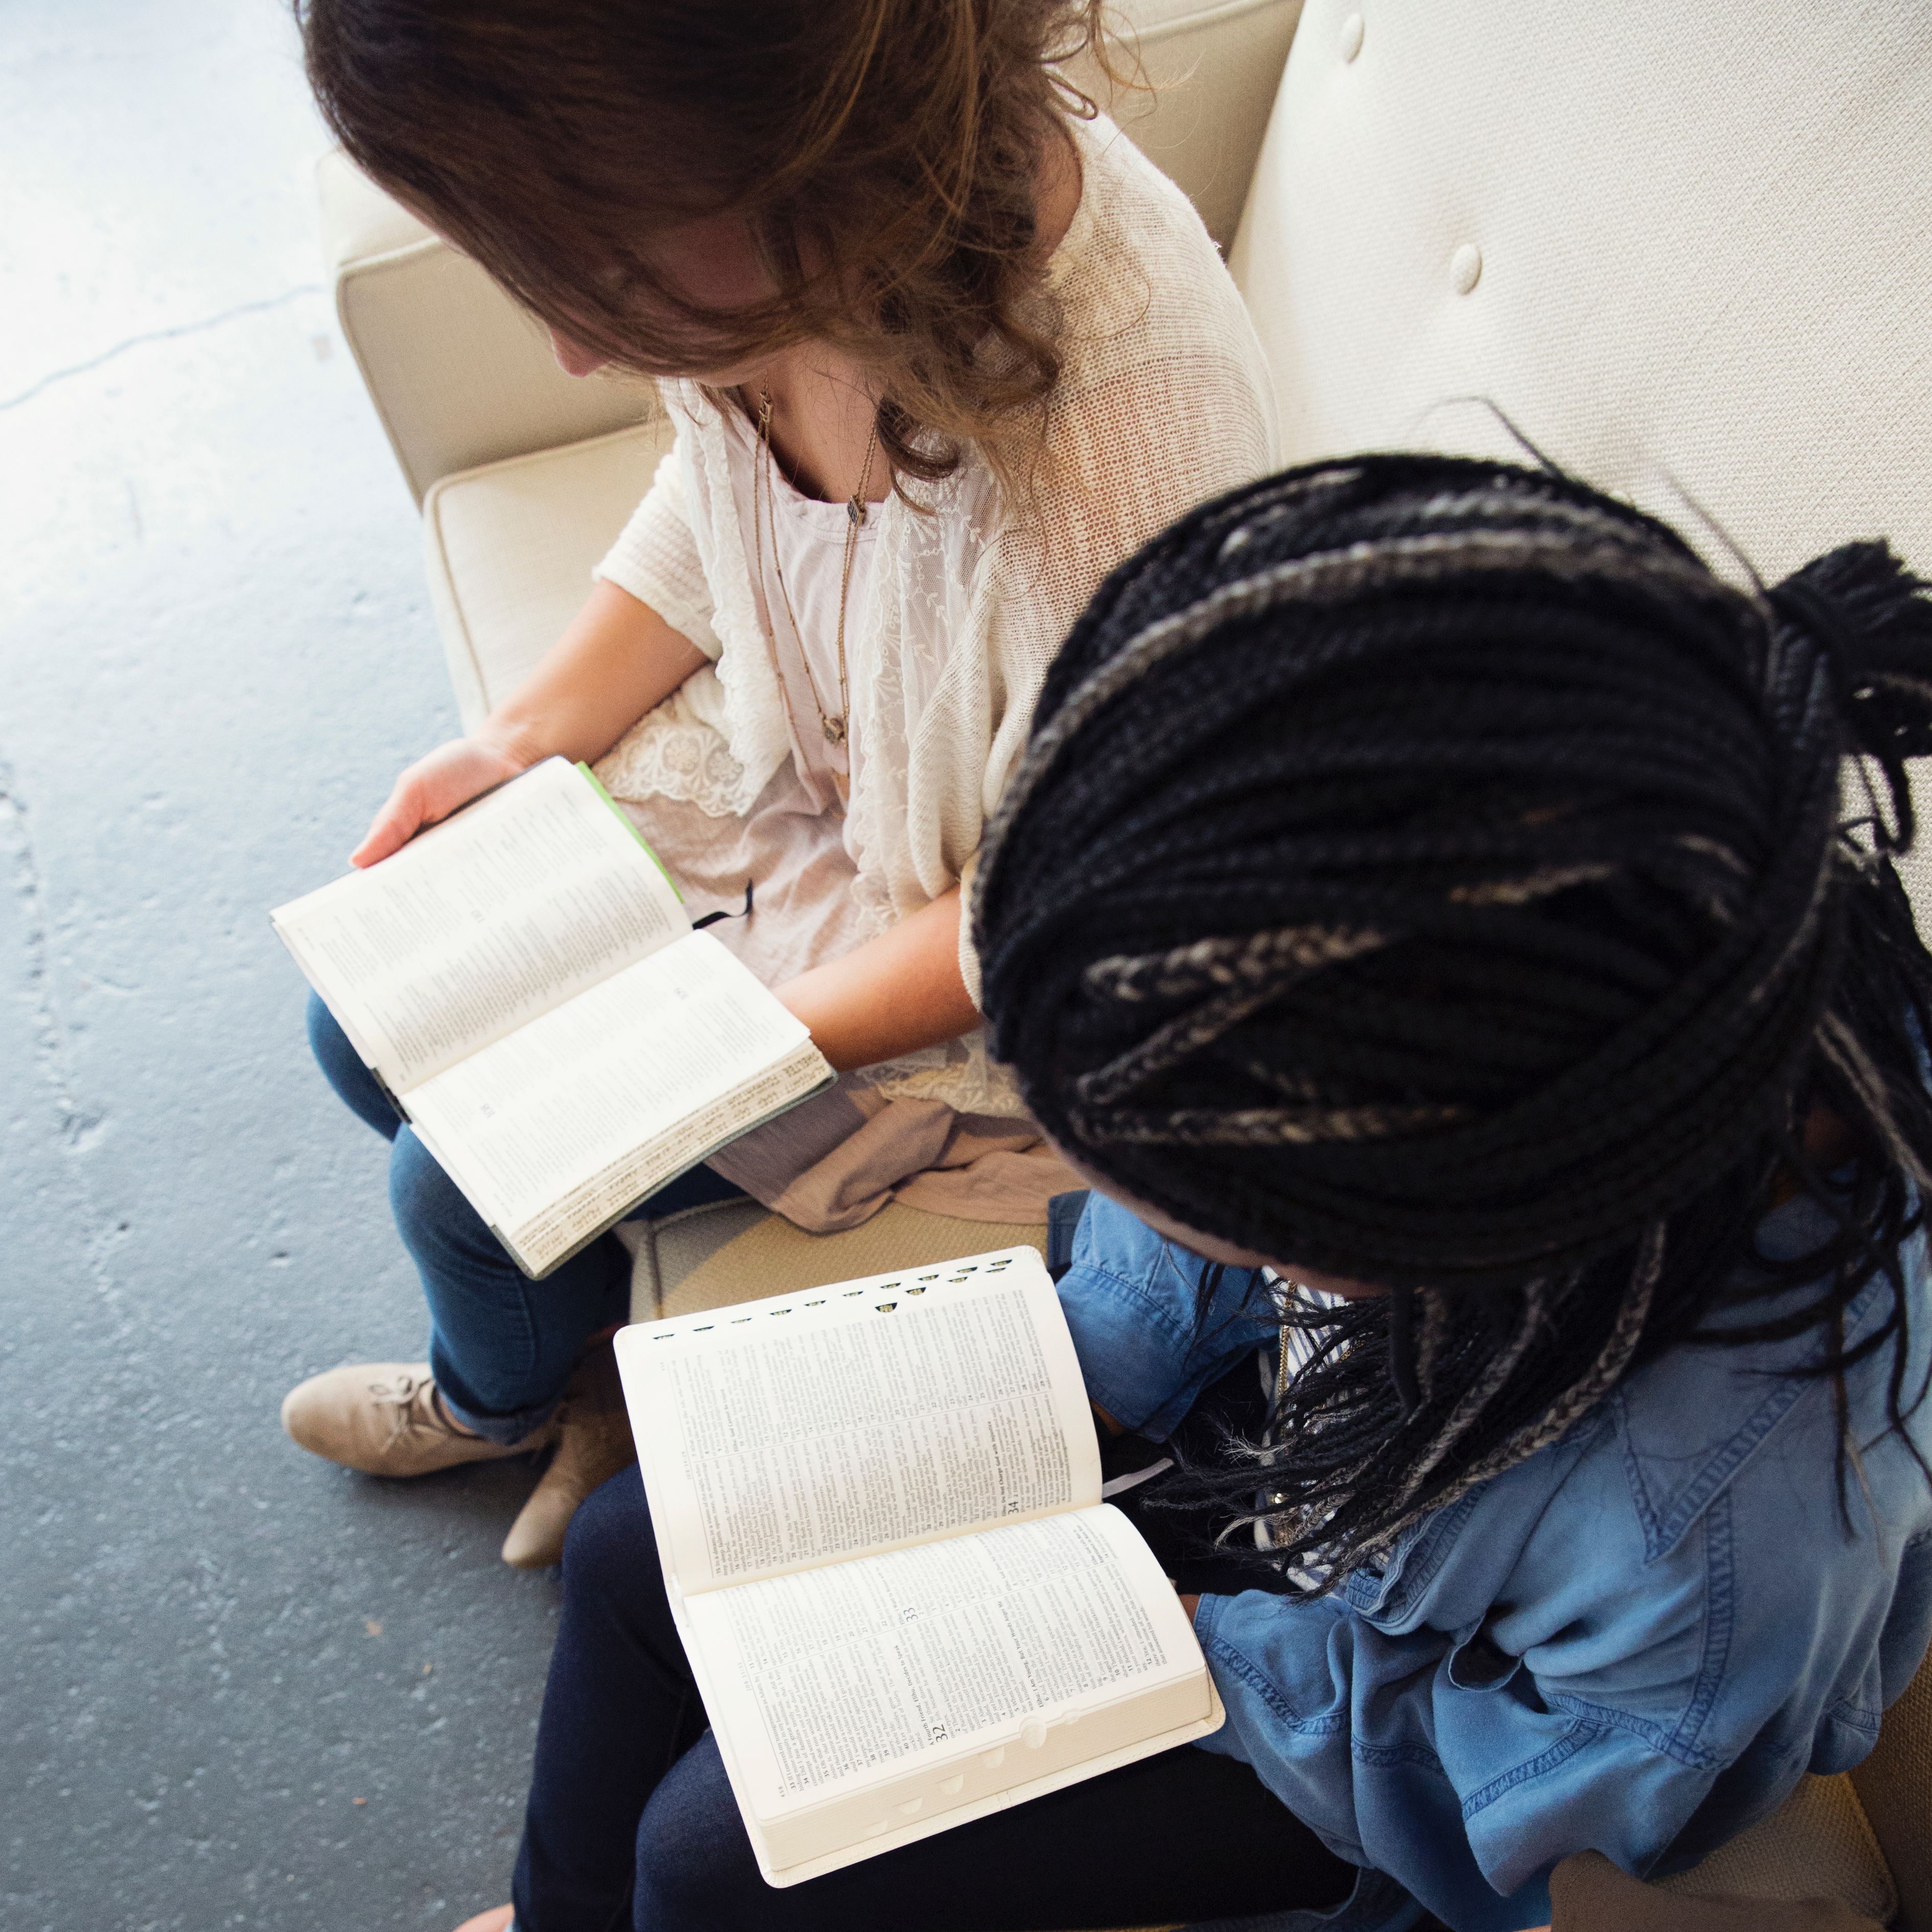 Women Reading Bible